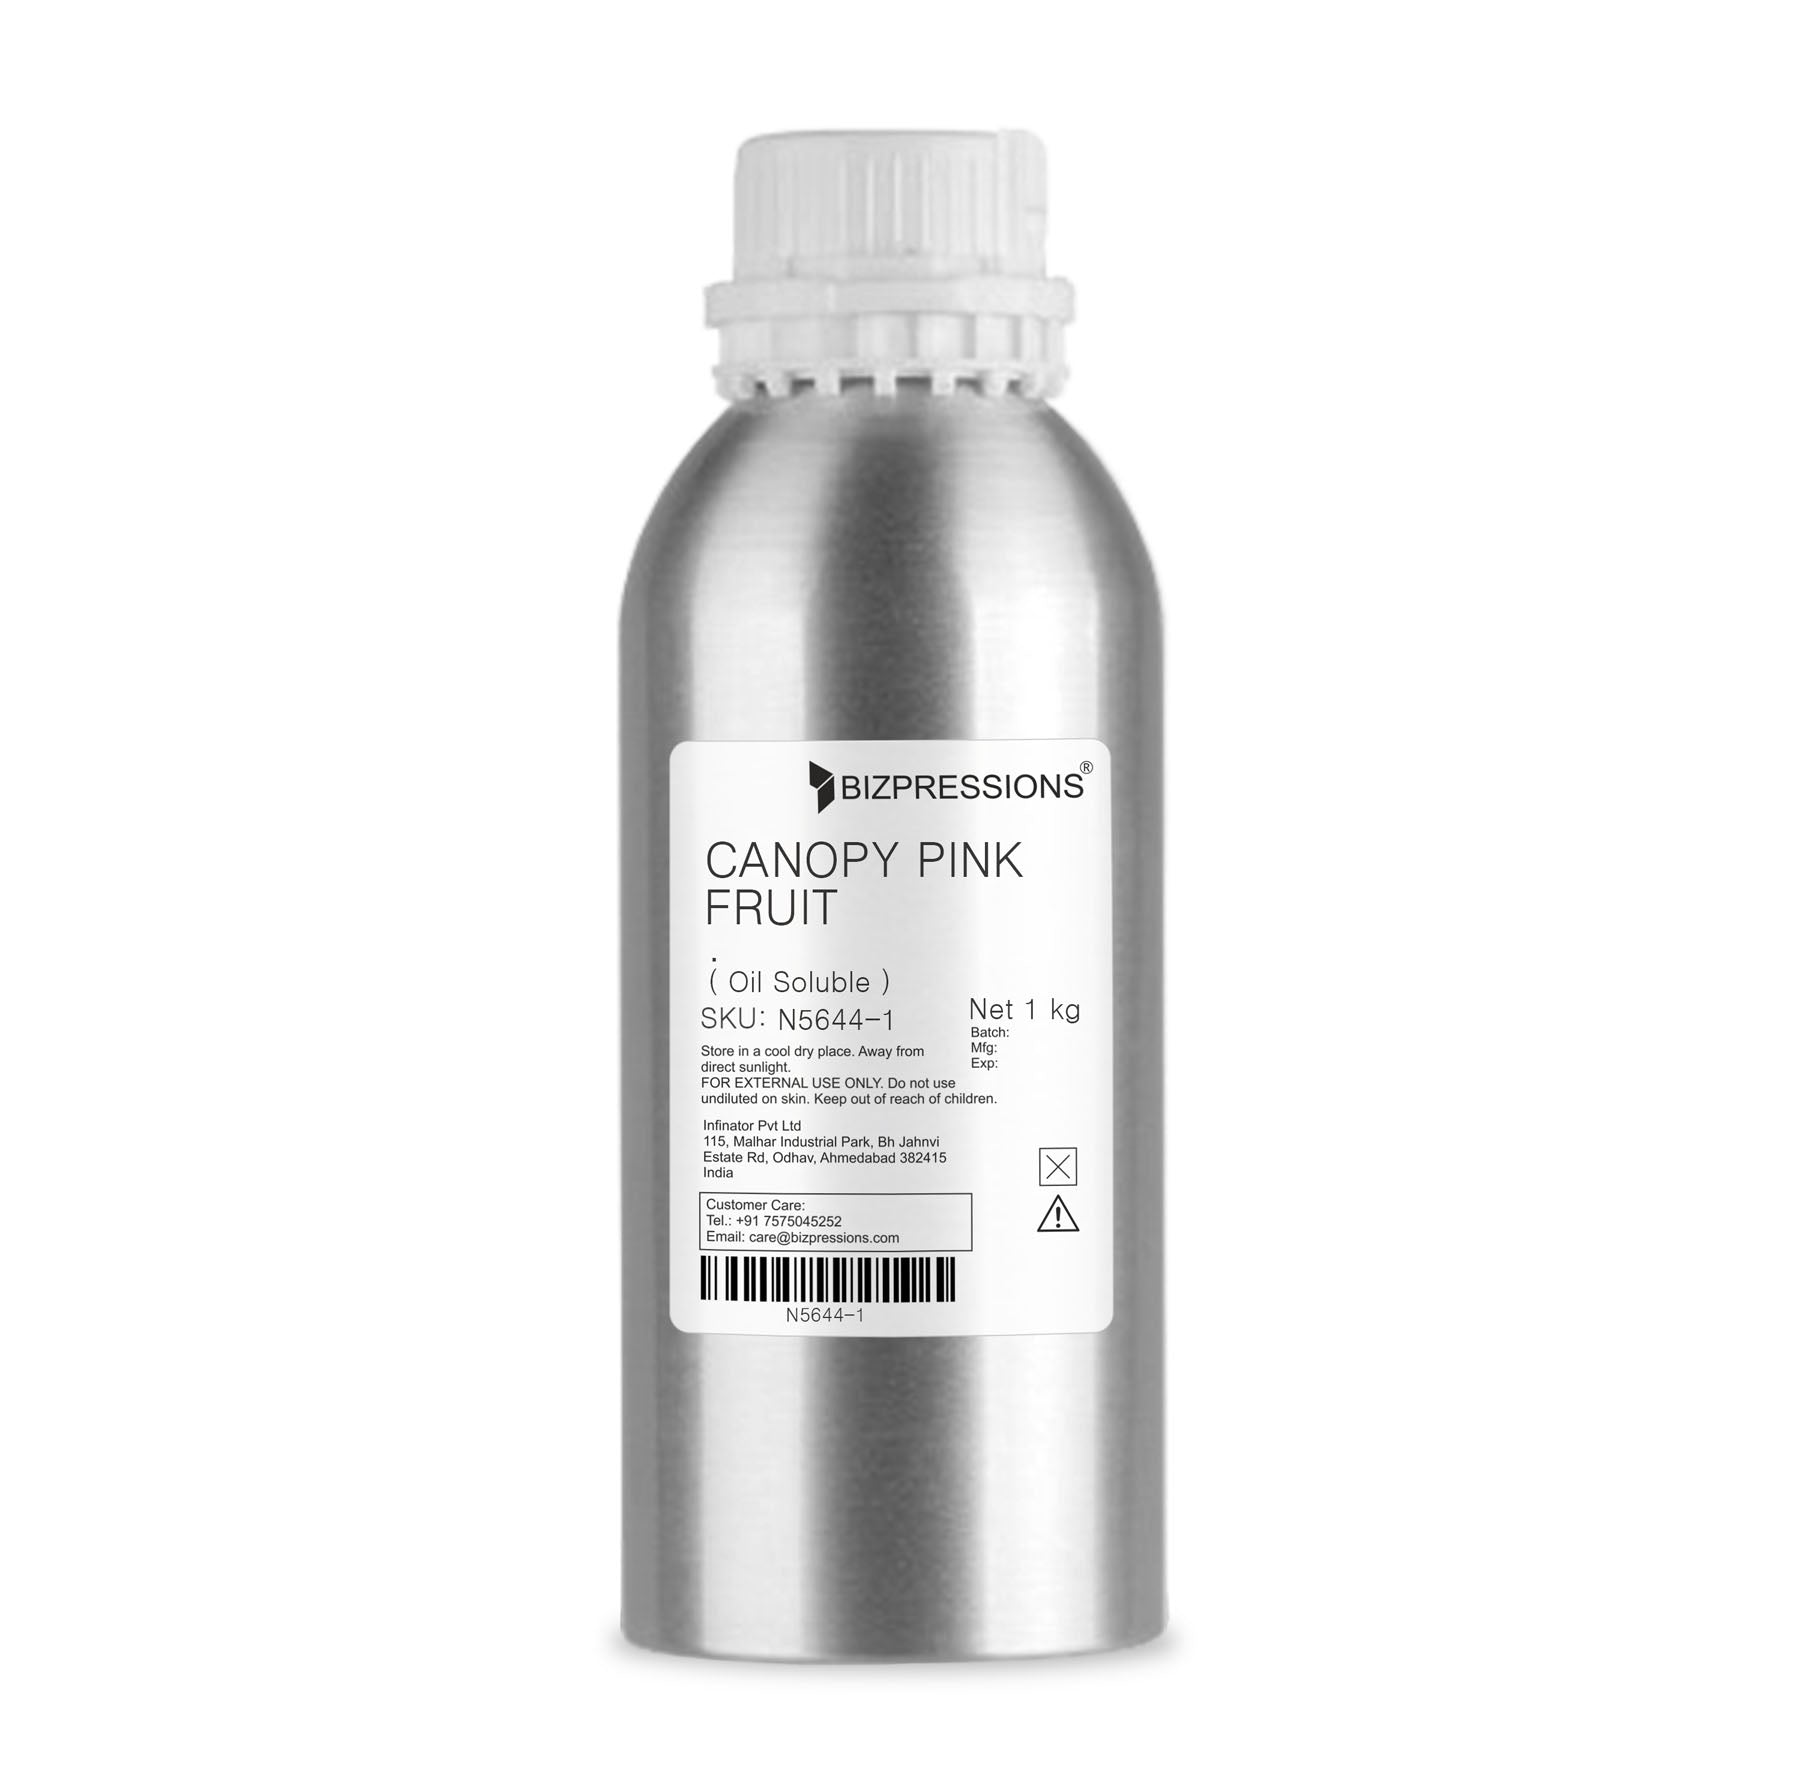 CANOPY PINK FRUIT - Fragrance ( Oil Soluble ) - 1 kg